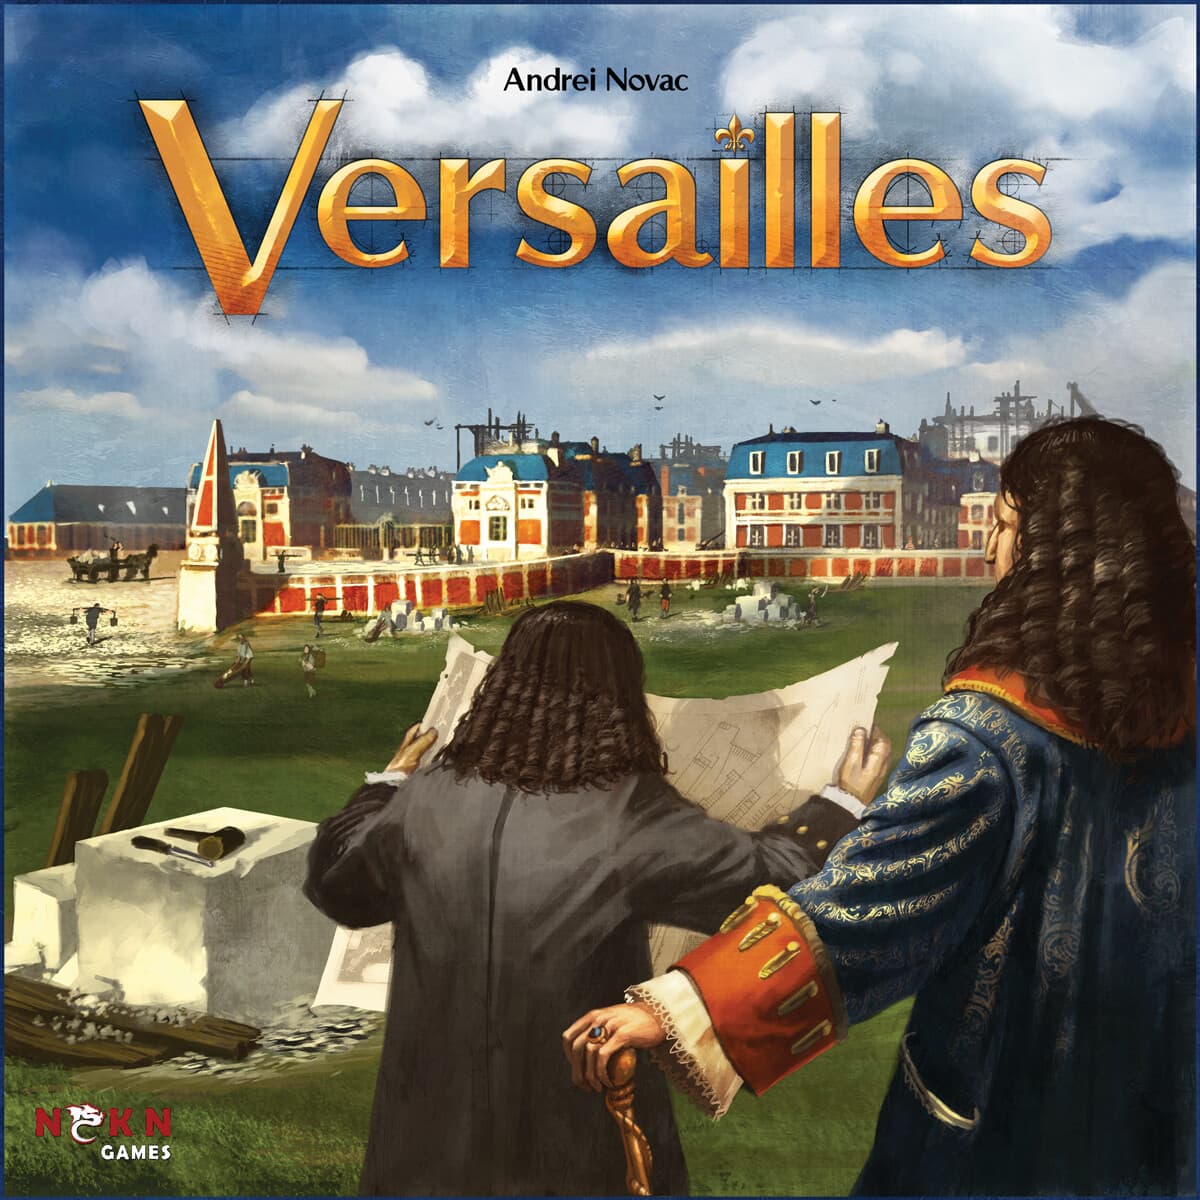 Versailles, une petite visite de chantier ?